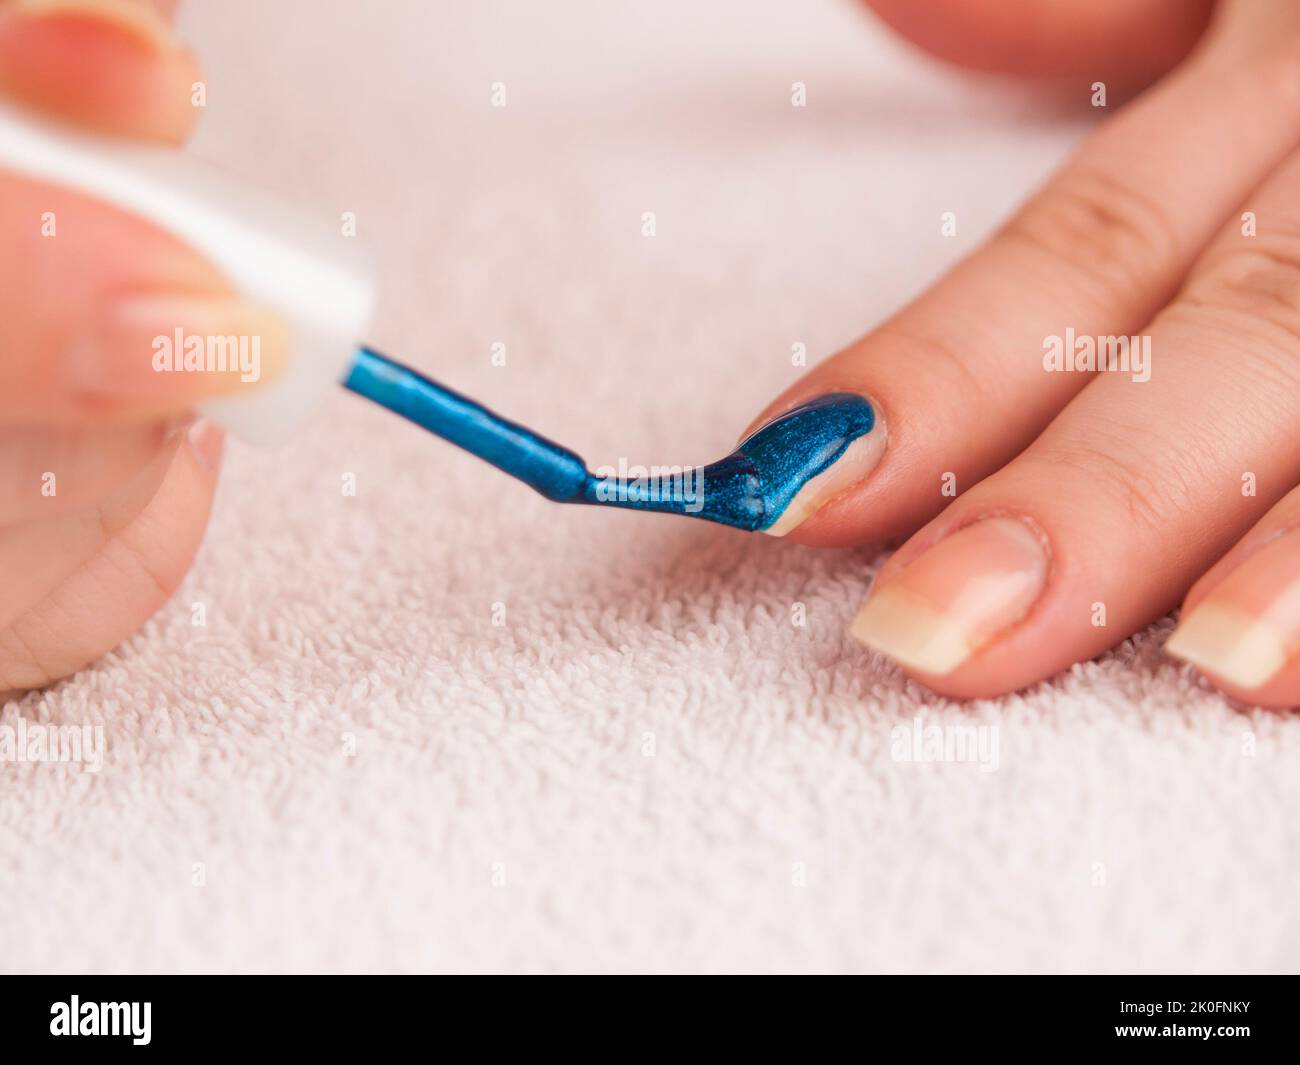 Woman applying dark blie shiny nail polish on forefinger Stock Photo